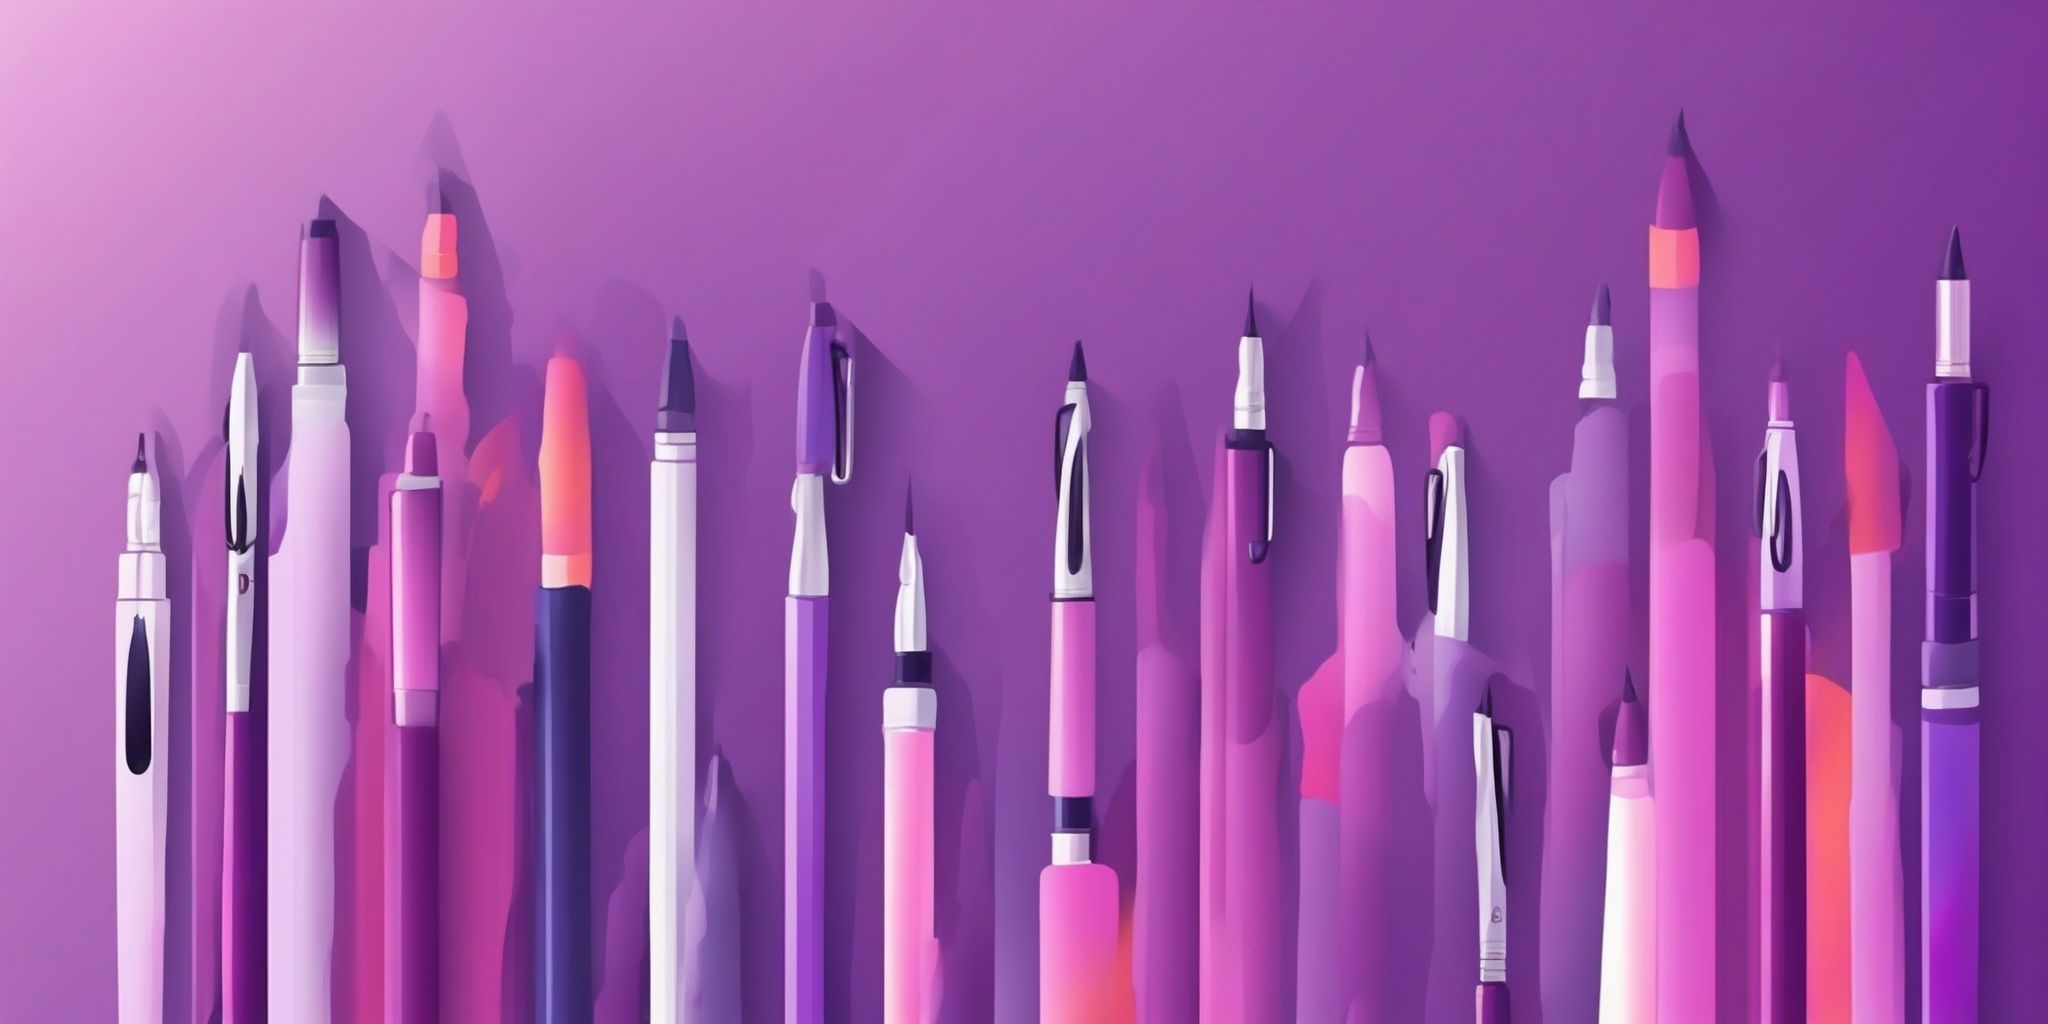 Pen in flat illustration style, colorful purple gradient colors